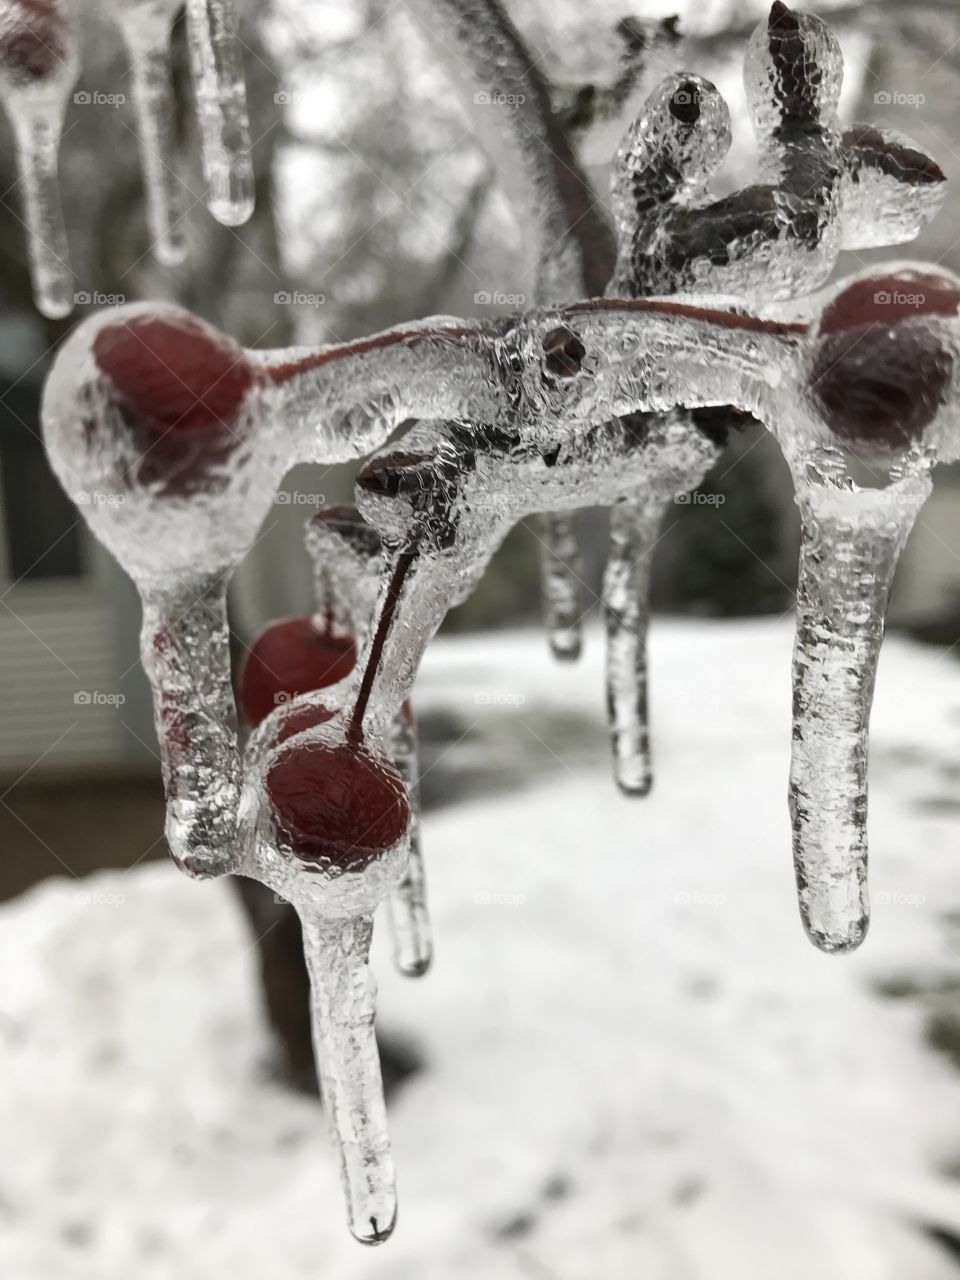 Iced berries